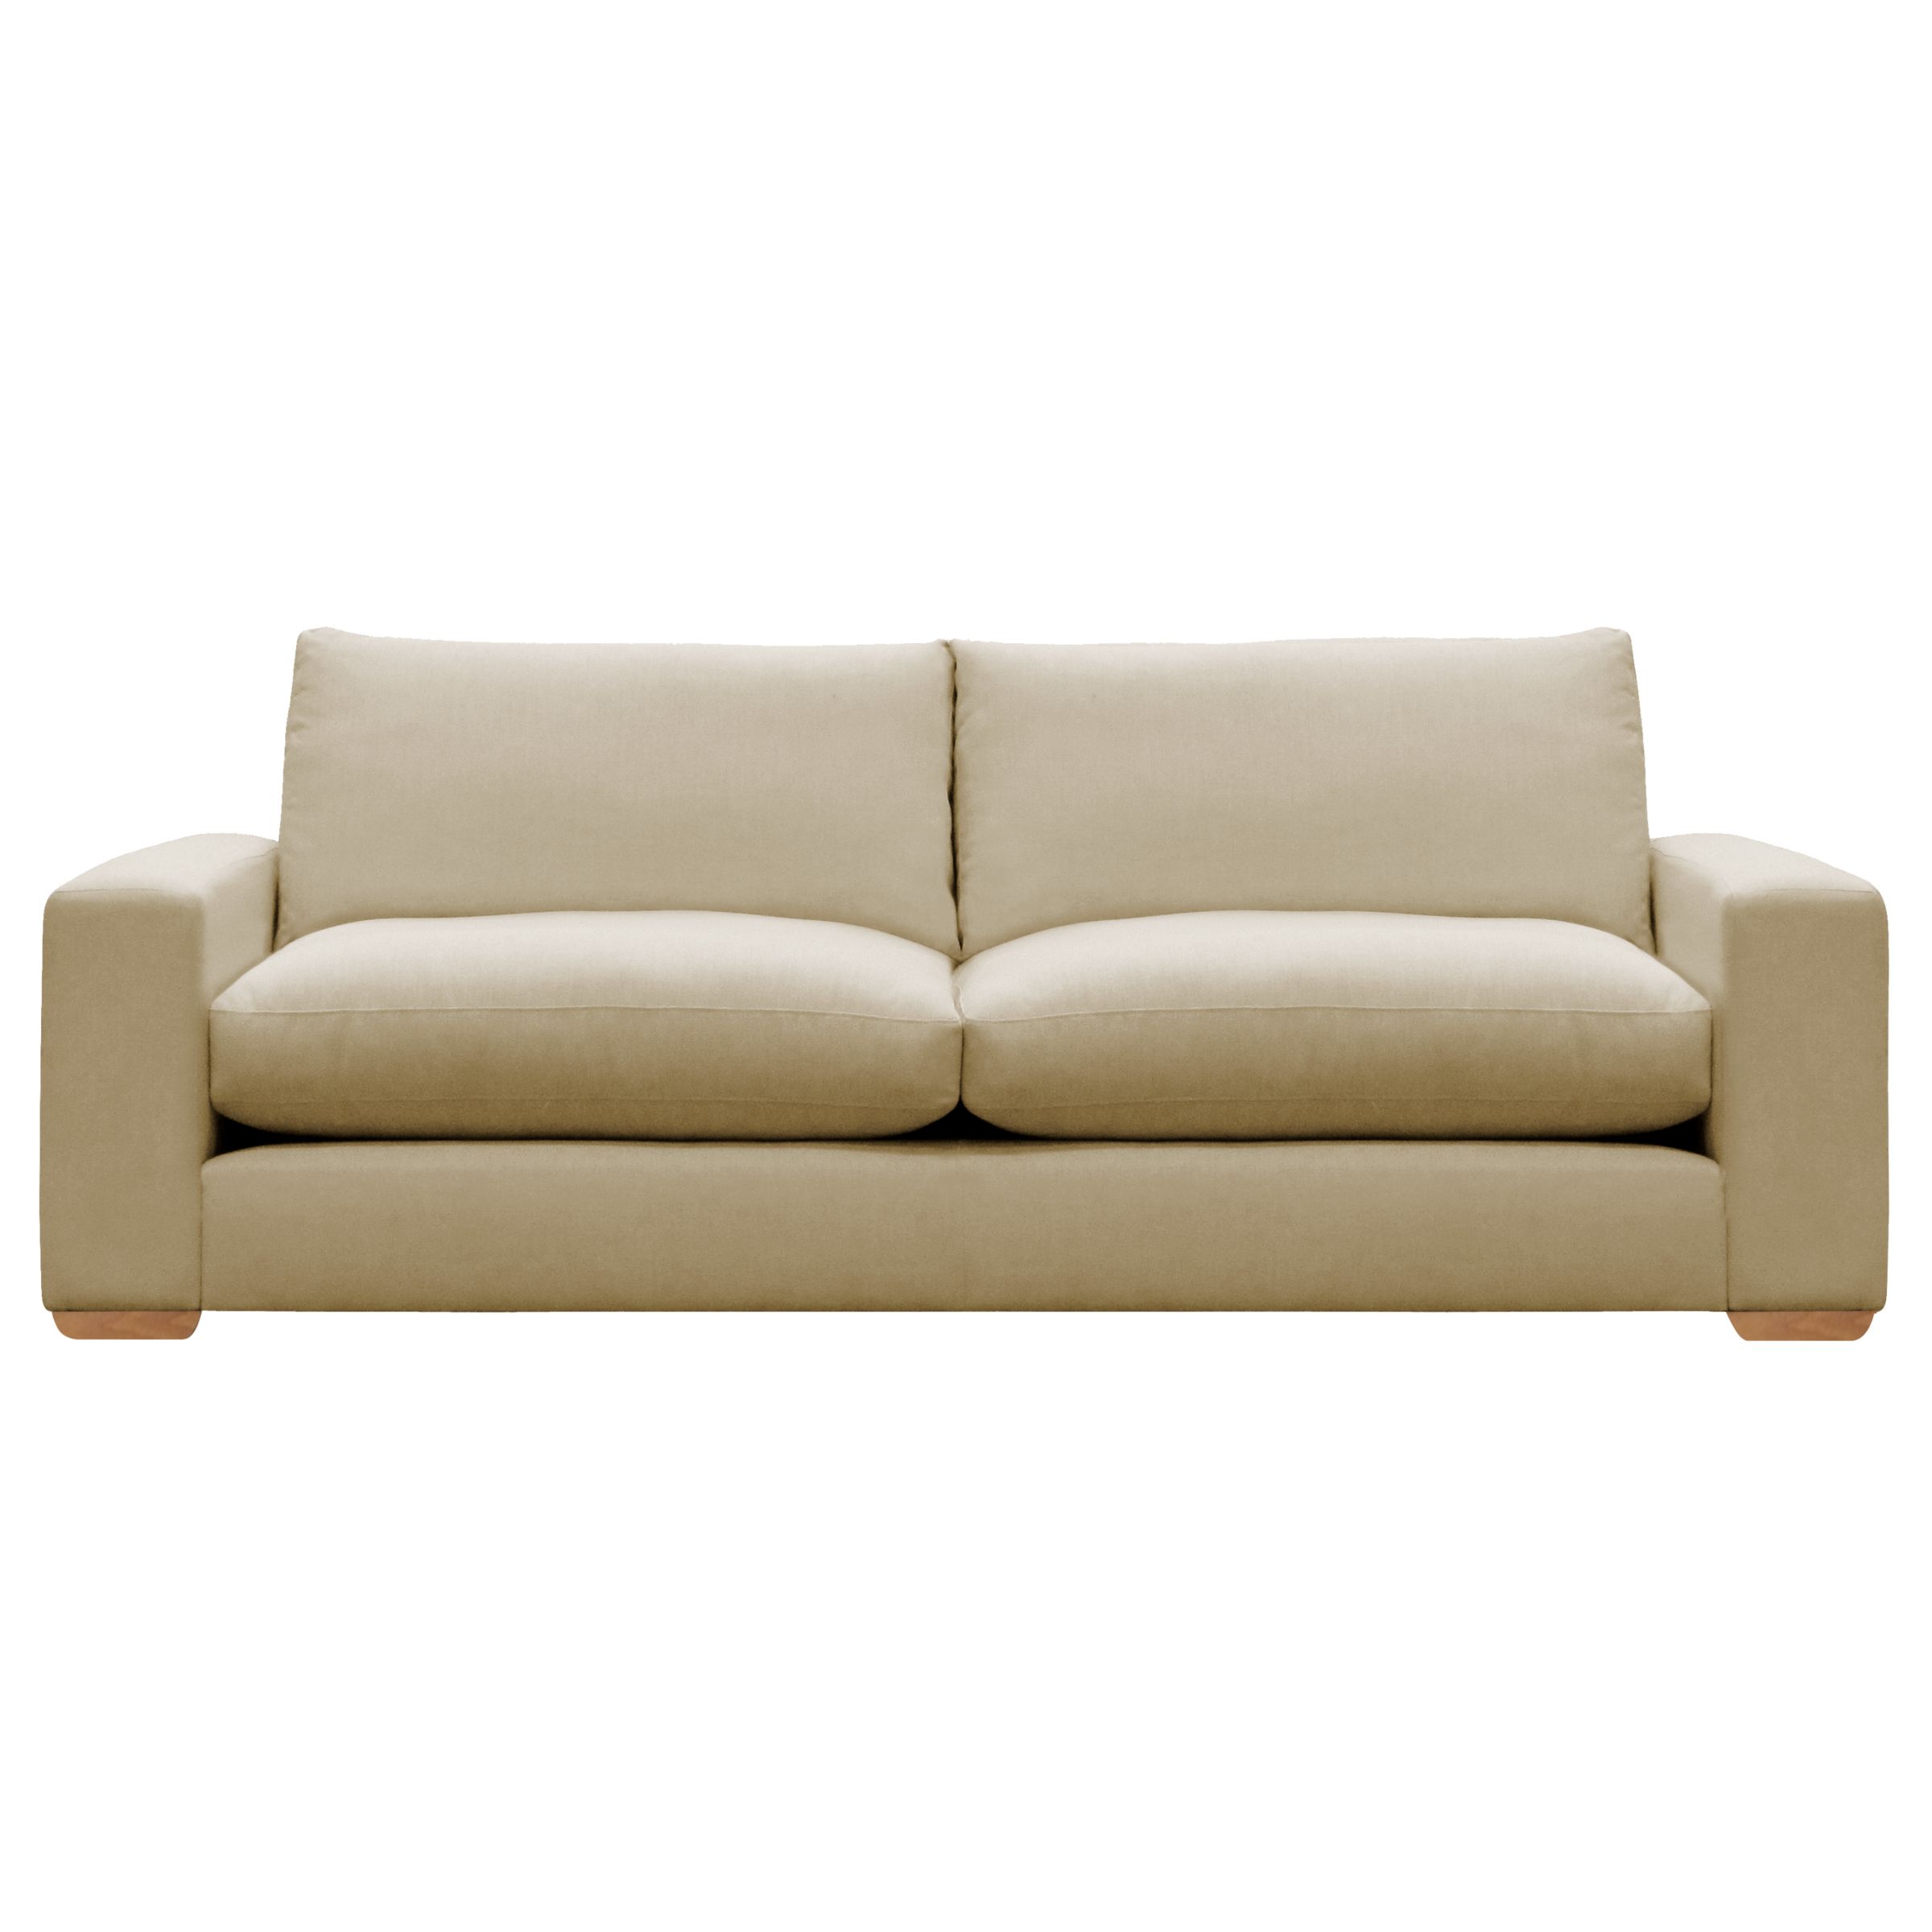 John Lewis Options Wide Arm Grand Sofa, Eaton Mocha, width 225cm